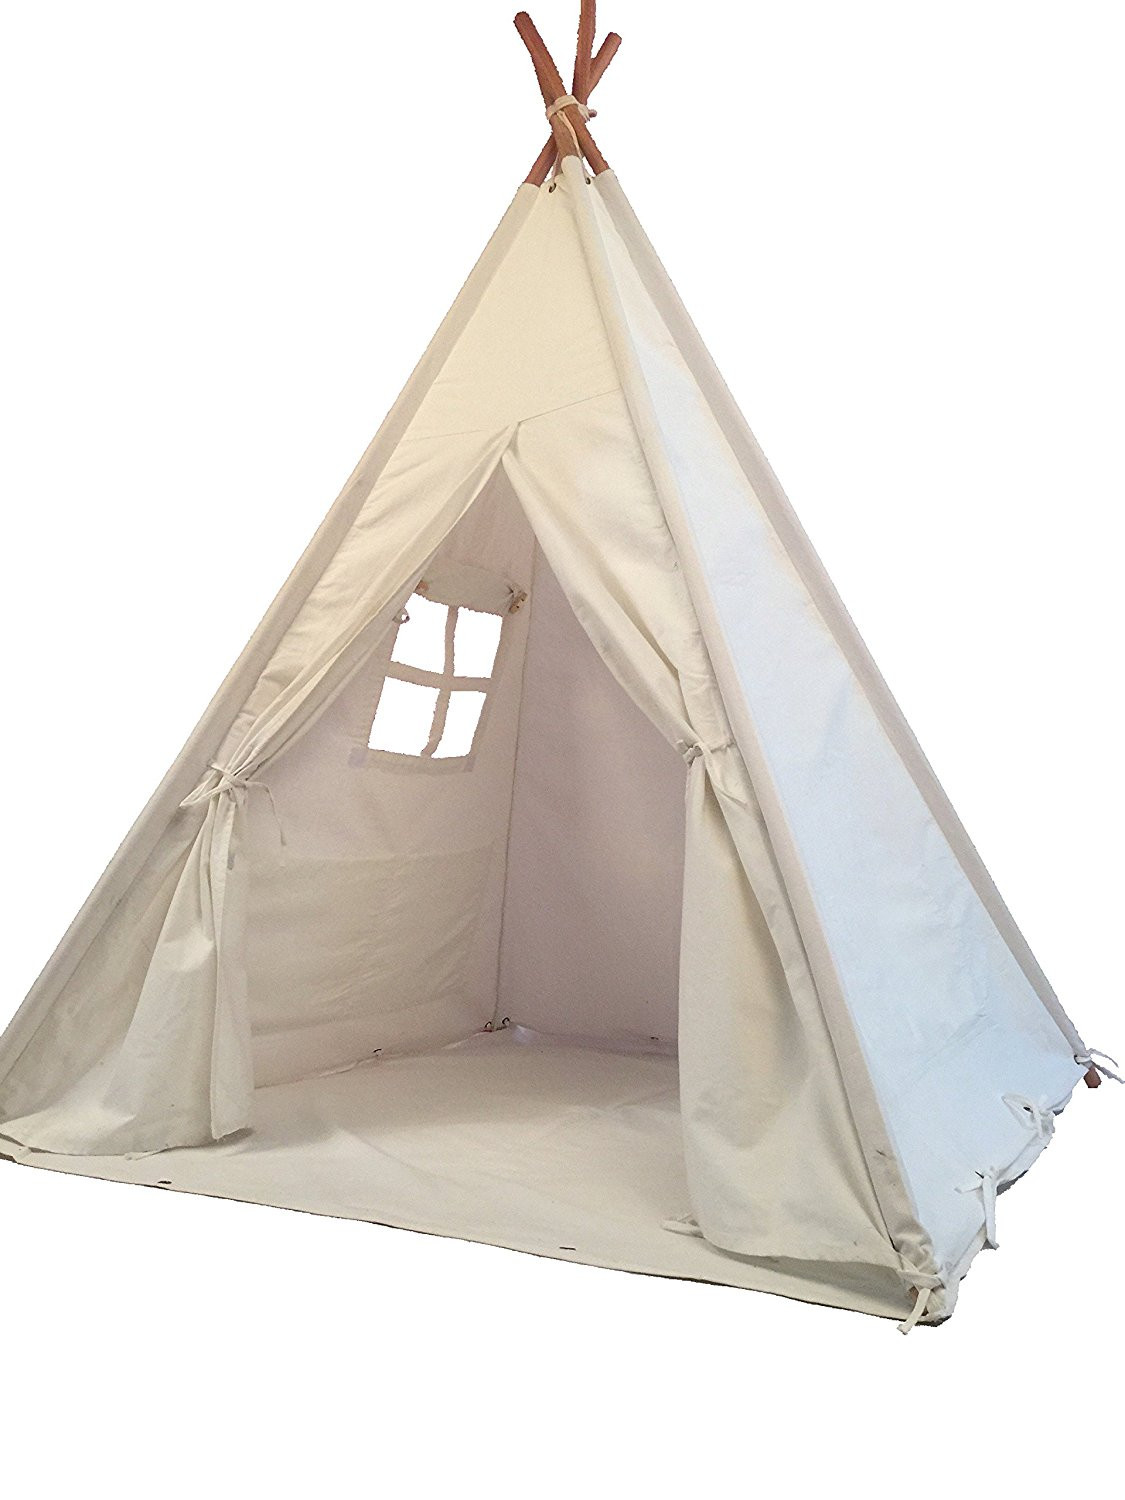 Indoor Play Tent For Kids
 Pericross Kids Teepee Tent Indian Play Tent Children s